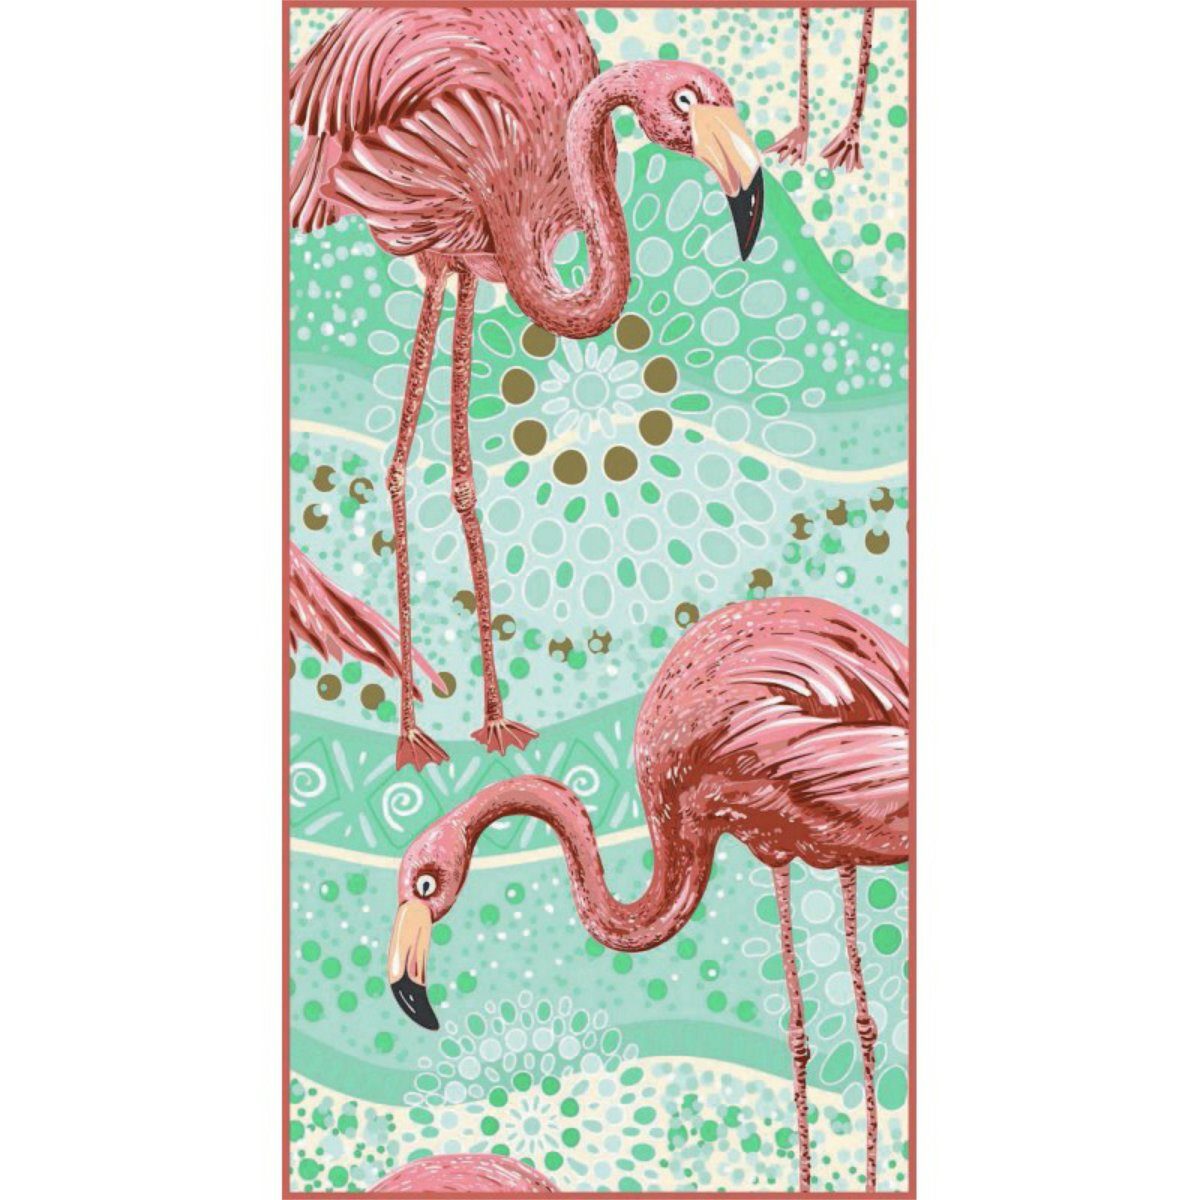 Ecarla pln Strandtuch Pink Flamingo Vintage XL Badetuch, mikrofaser, 70x150 cm